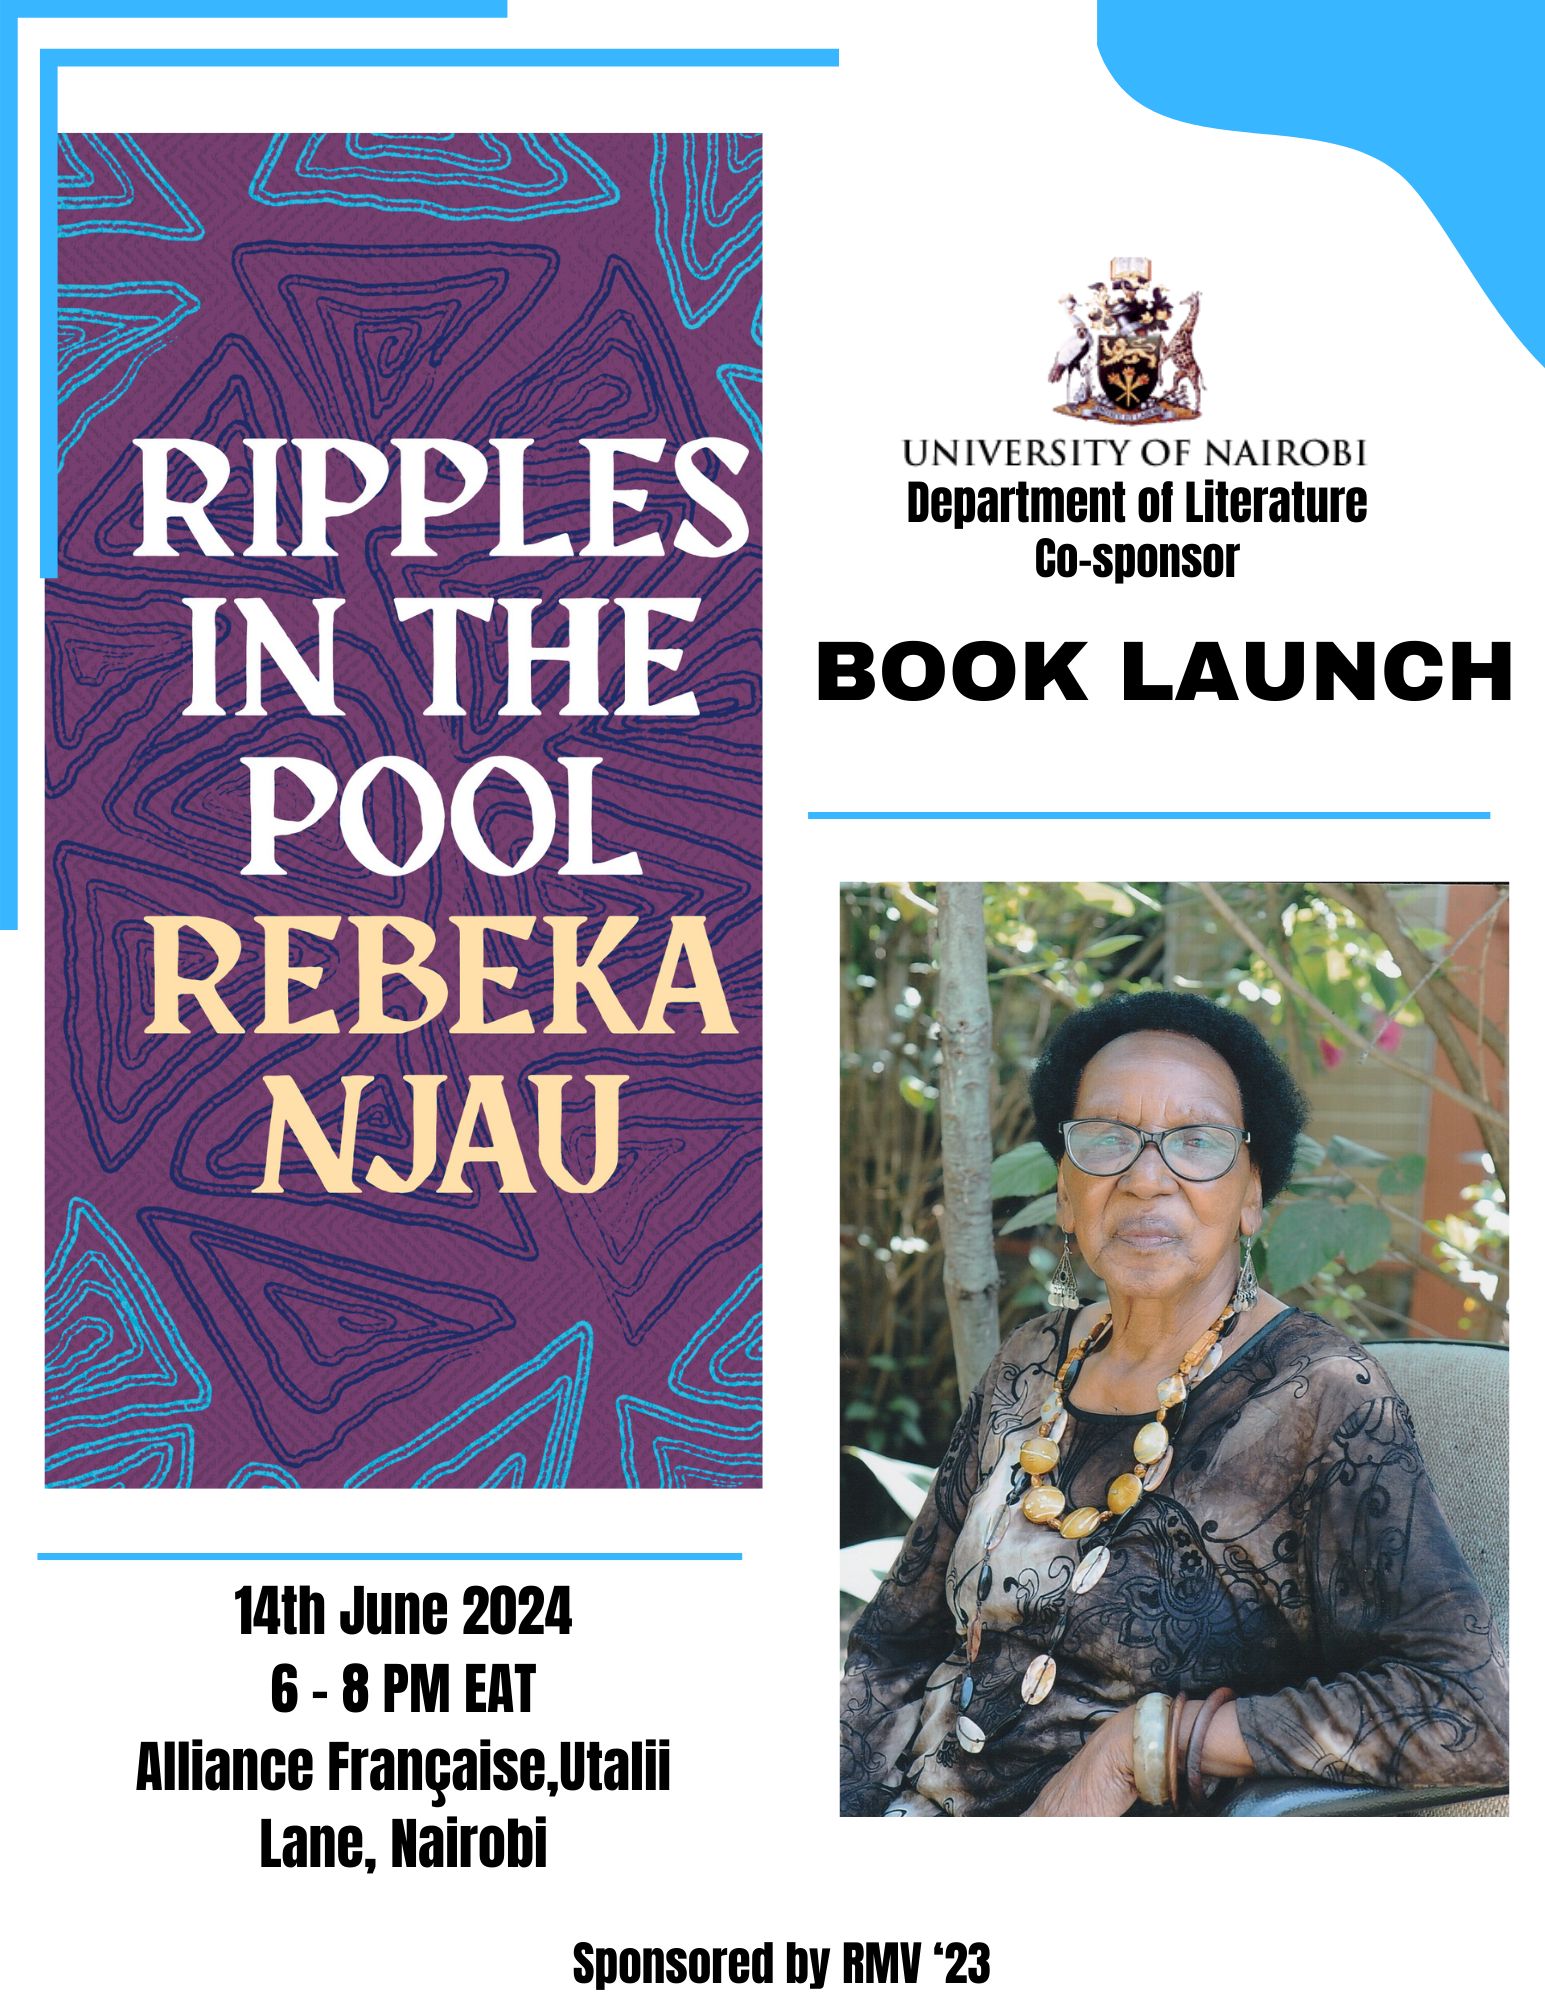 Ripples in the Pool by Rebbeca Njau